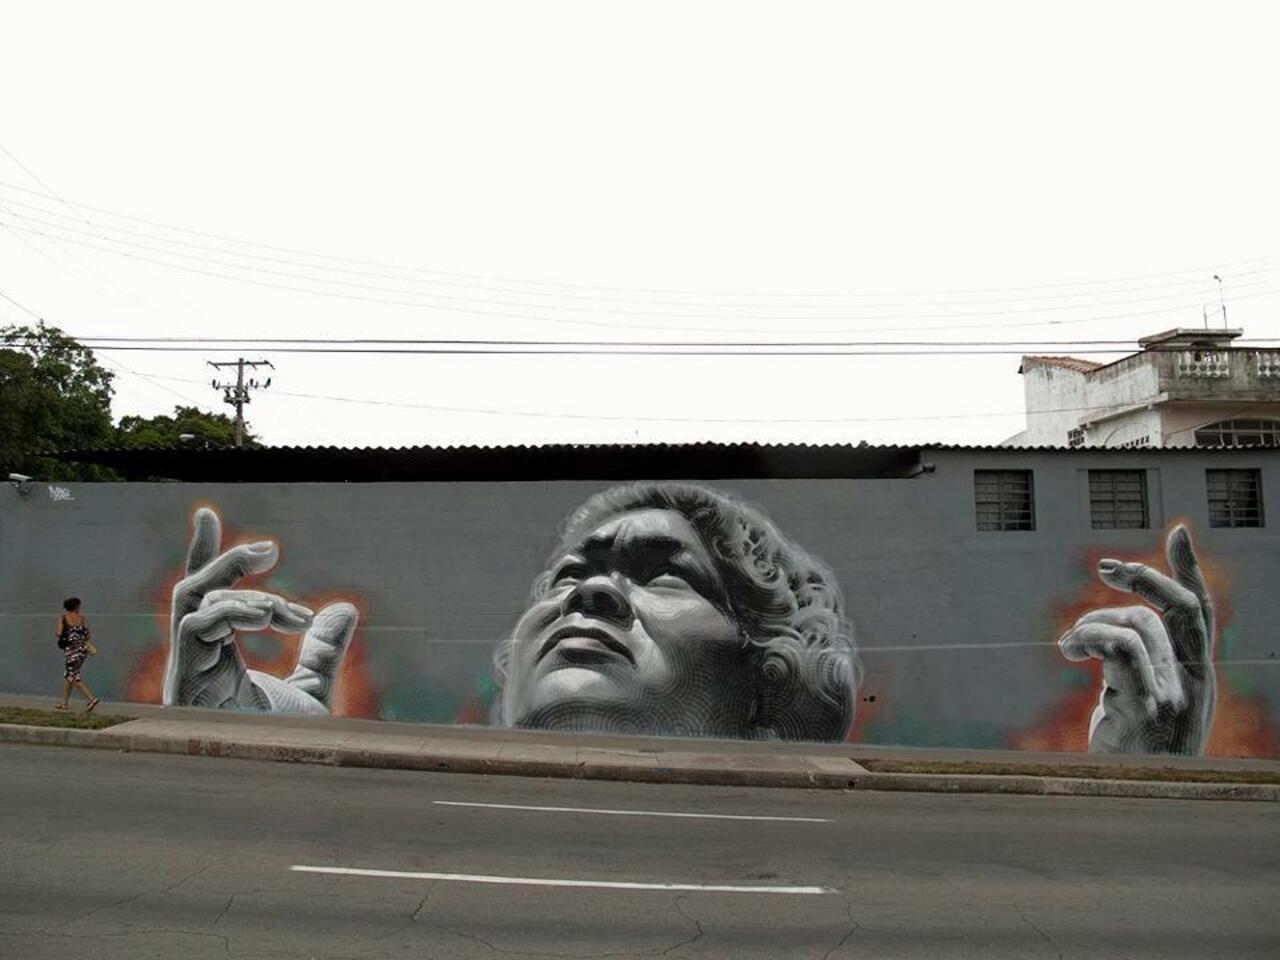 RT @designopinion: Artist 'El Mac' new Street Art mural located in Havana, Cuba #art #mural #graffiti #streetart http://t.co/TcfFd6T5n3